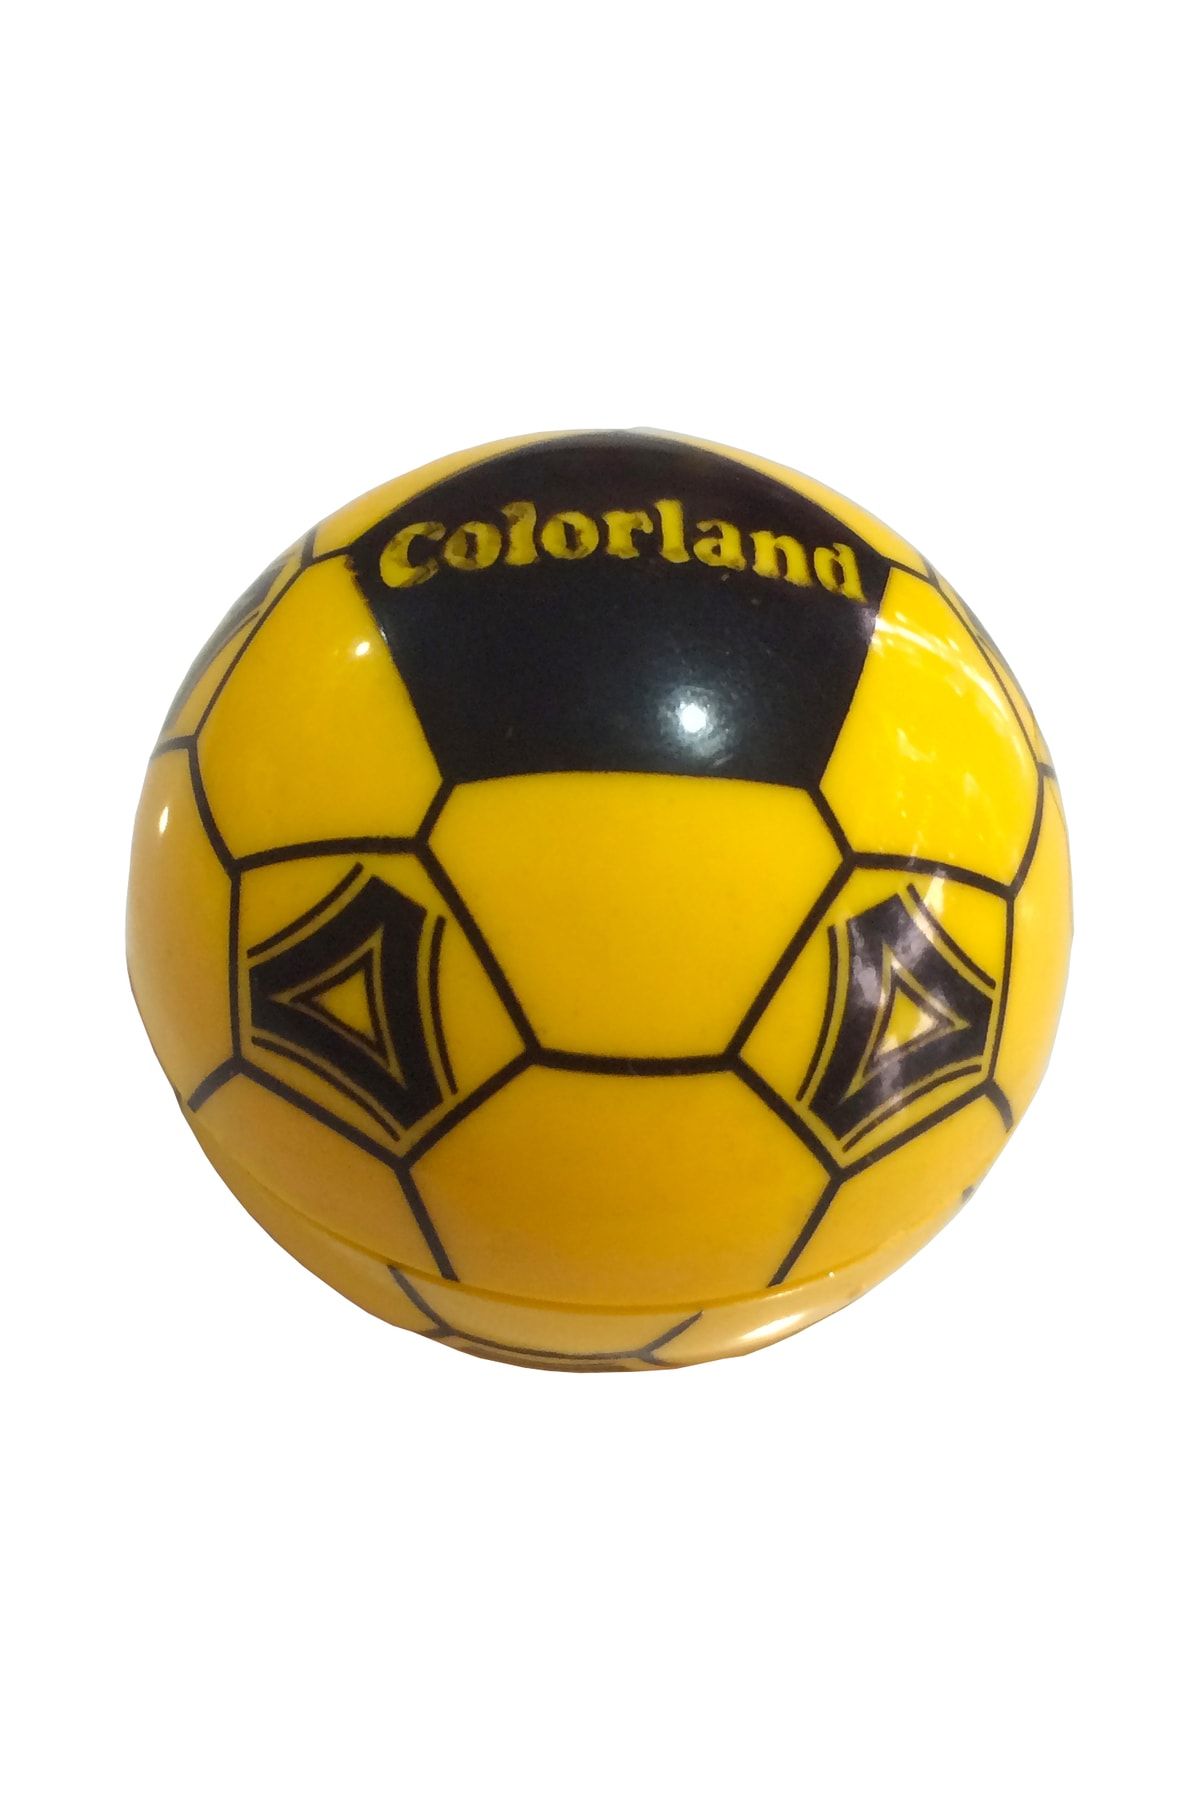 Colorland Futbol Topu Şeklinde Kalemtraş Açacak